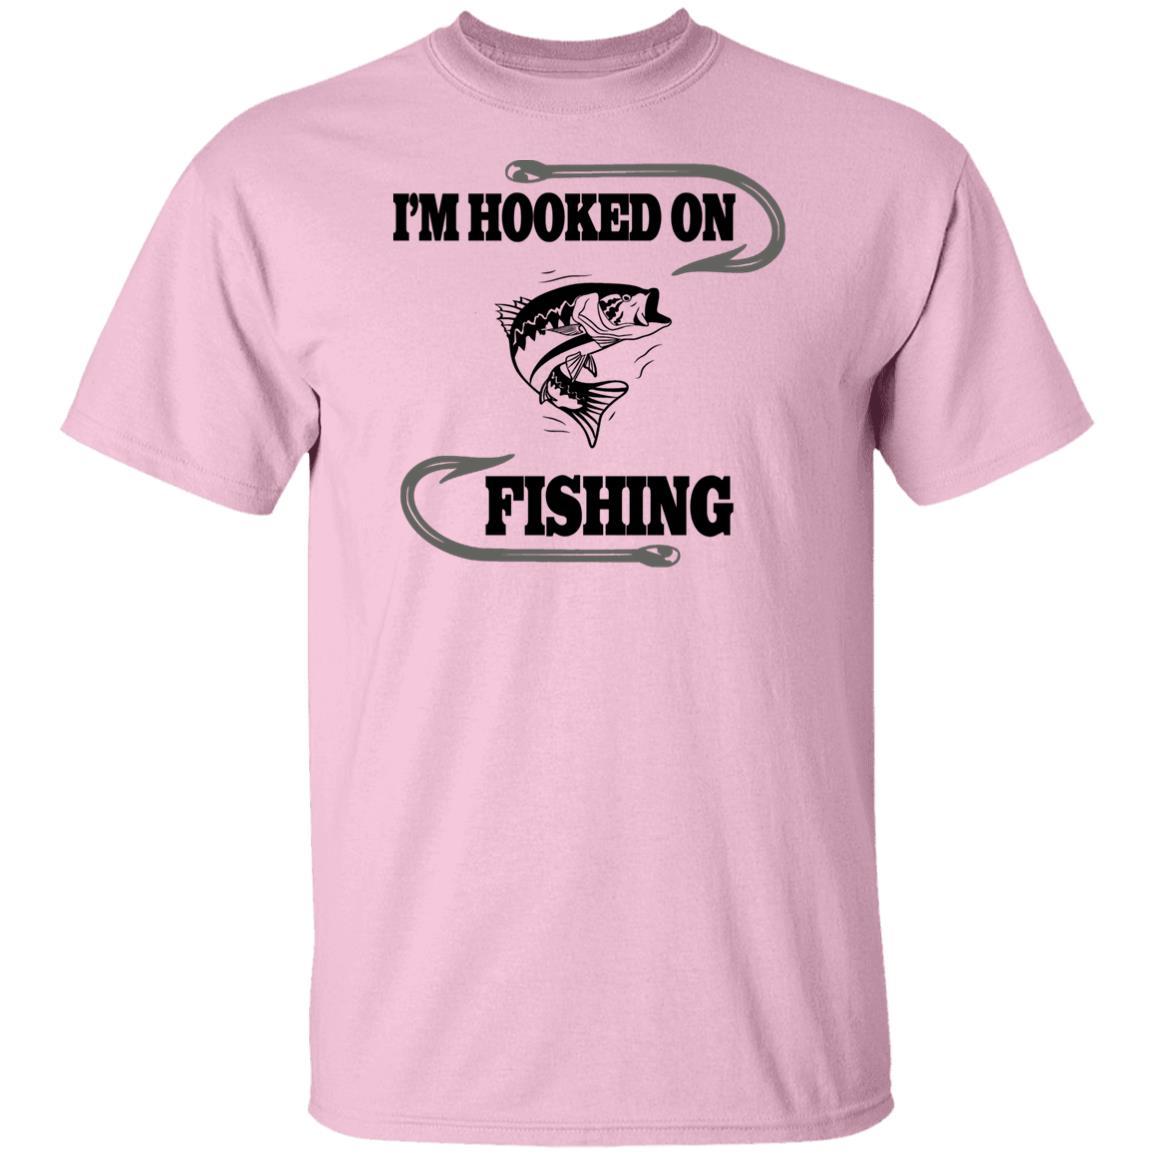 I'm hooked on fishing t shirt b light-pink